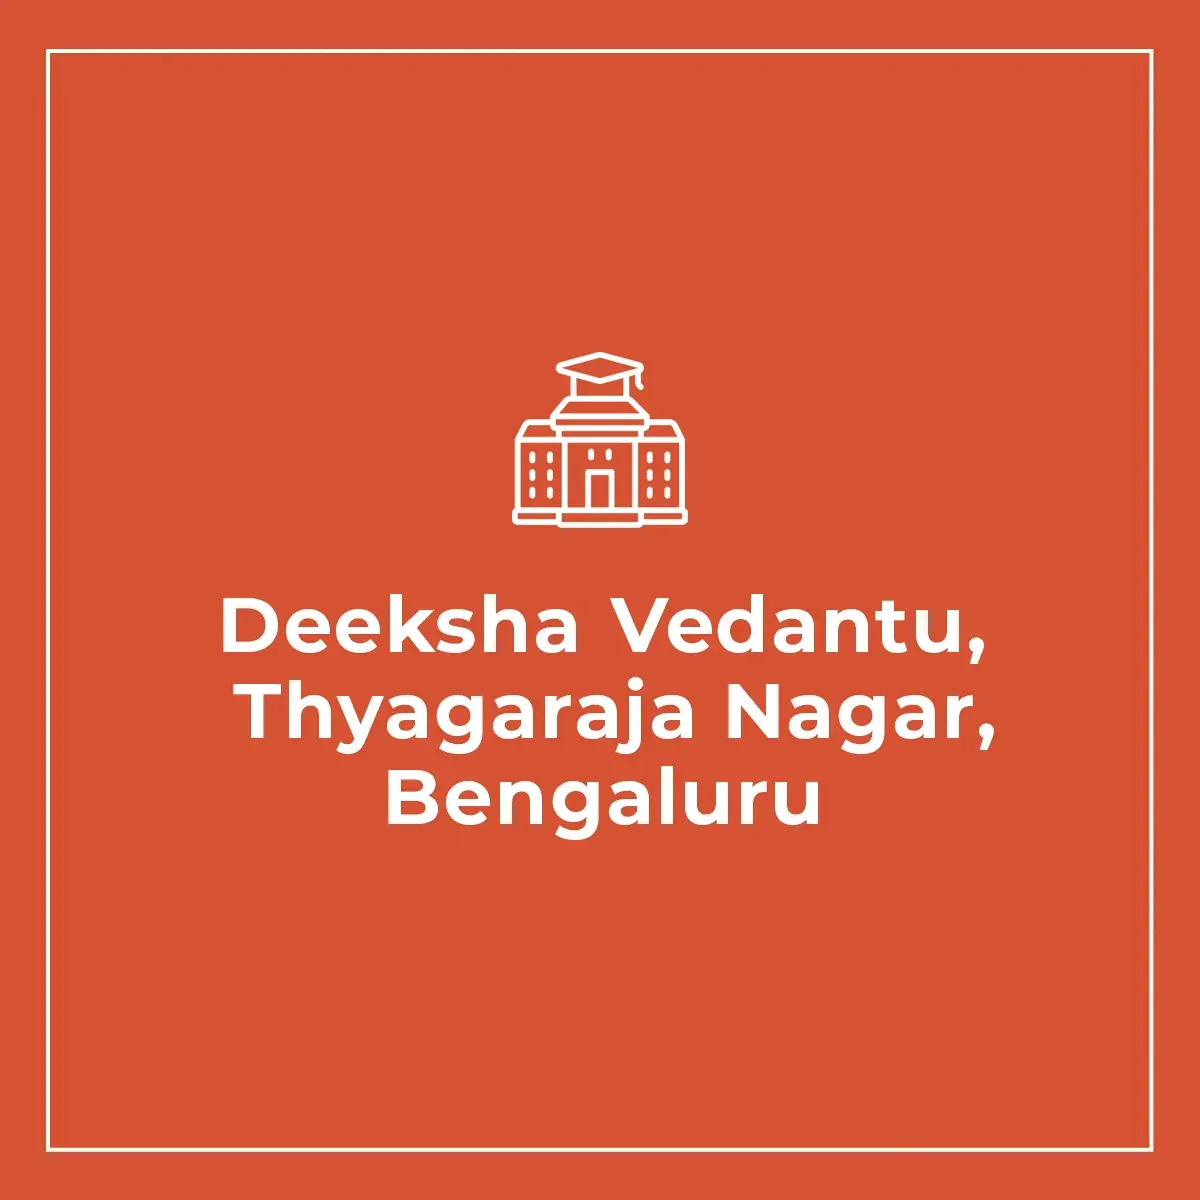 Deeksha Vedantu, Thyagaraja Nagar, Bengaluru